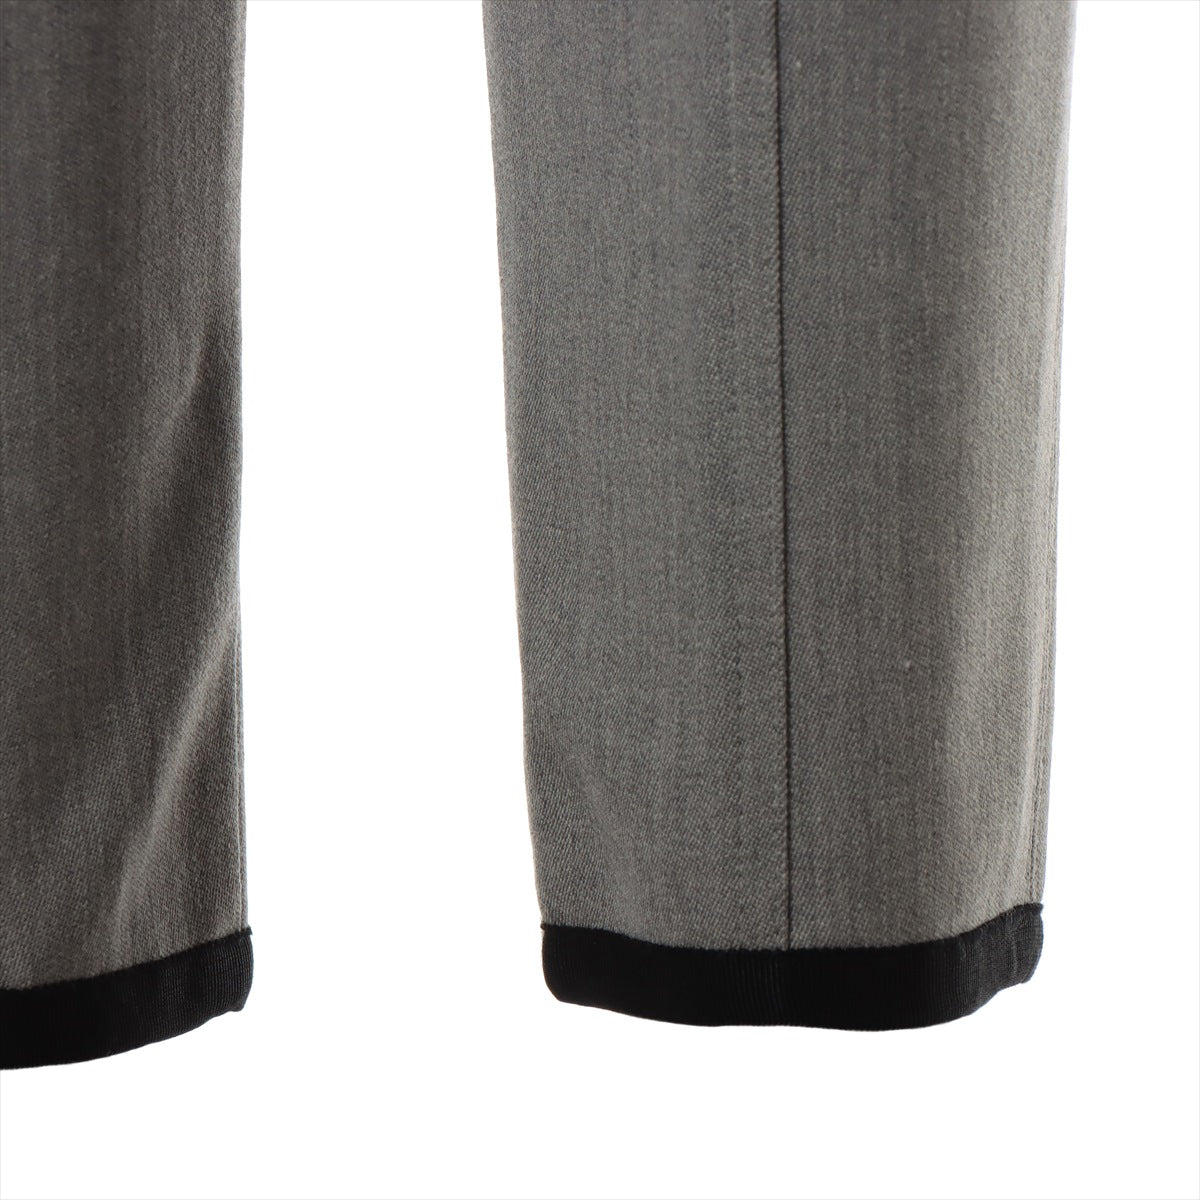 Hermès Wool x polyurethane Pants 36 Ladies' Grey